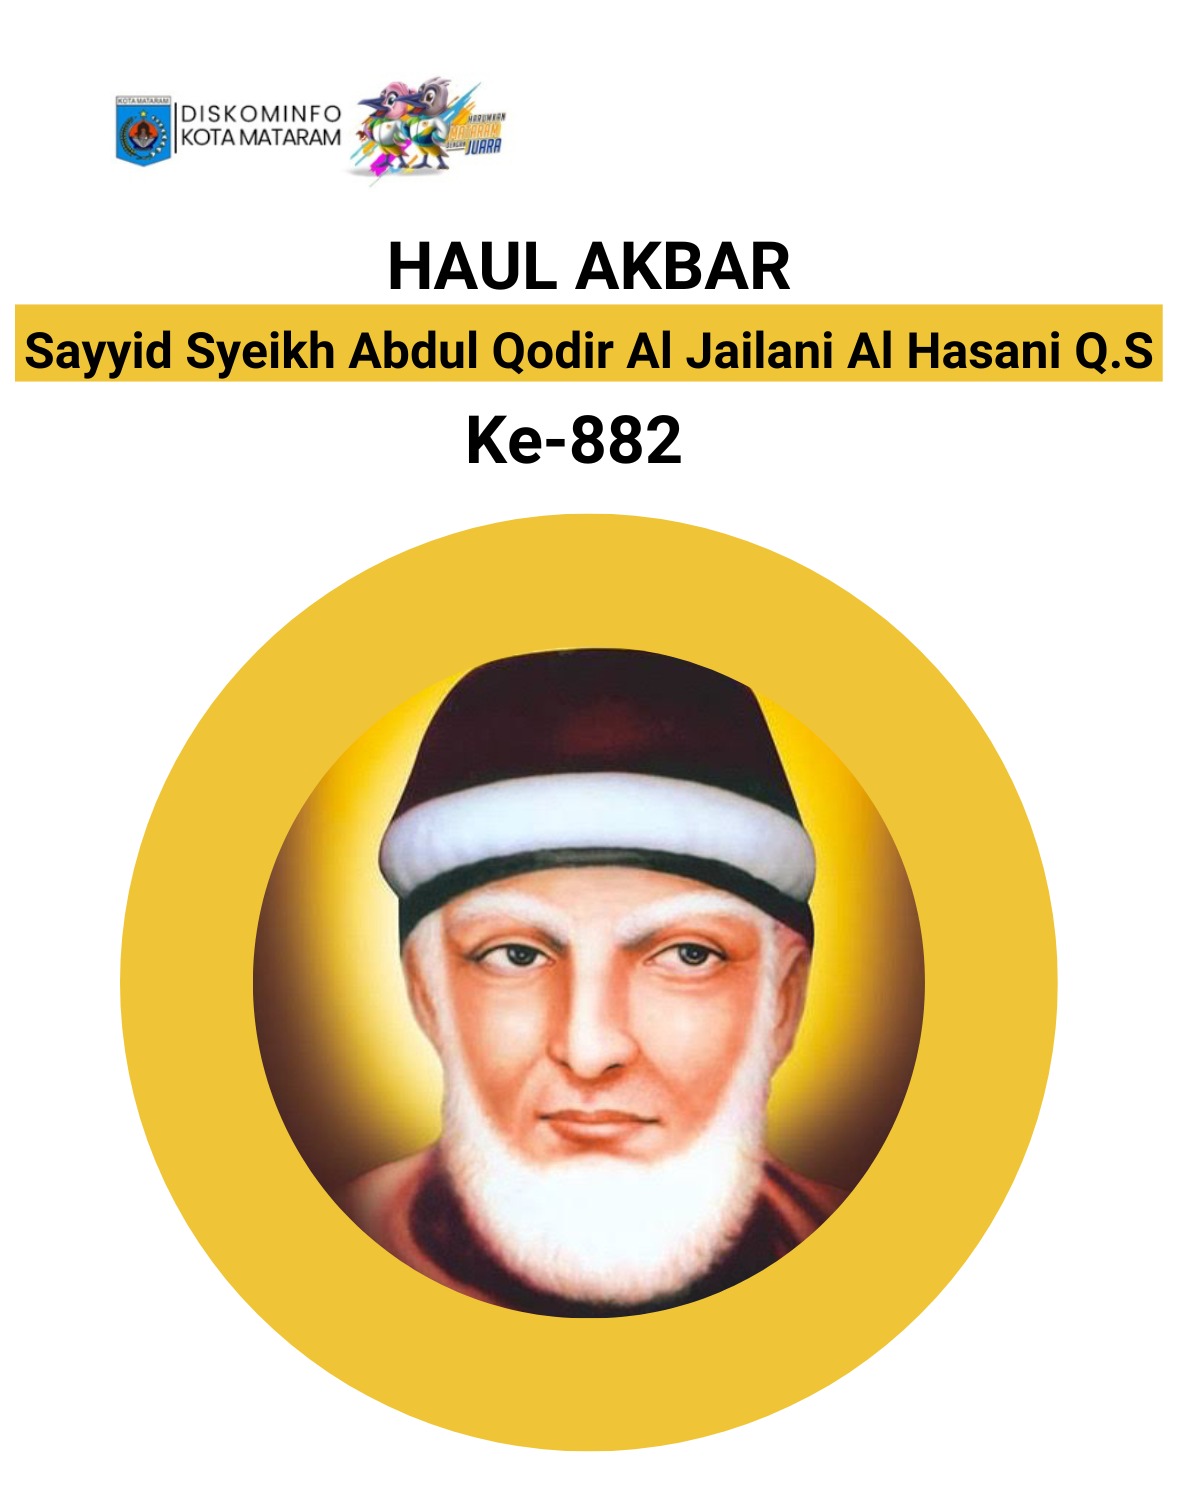 Haul Akbar Sayyid Syeikh Abdul Qodir Al Jailani Al Hasani Q.S Ke-882